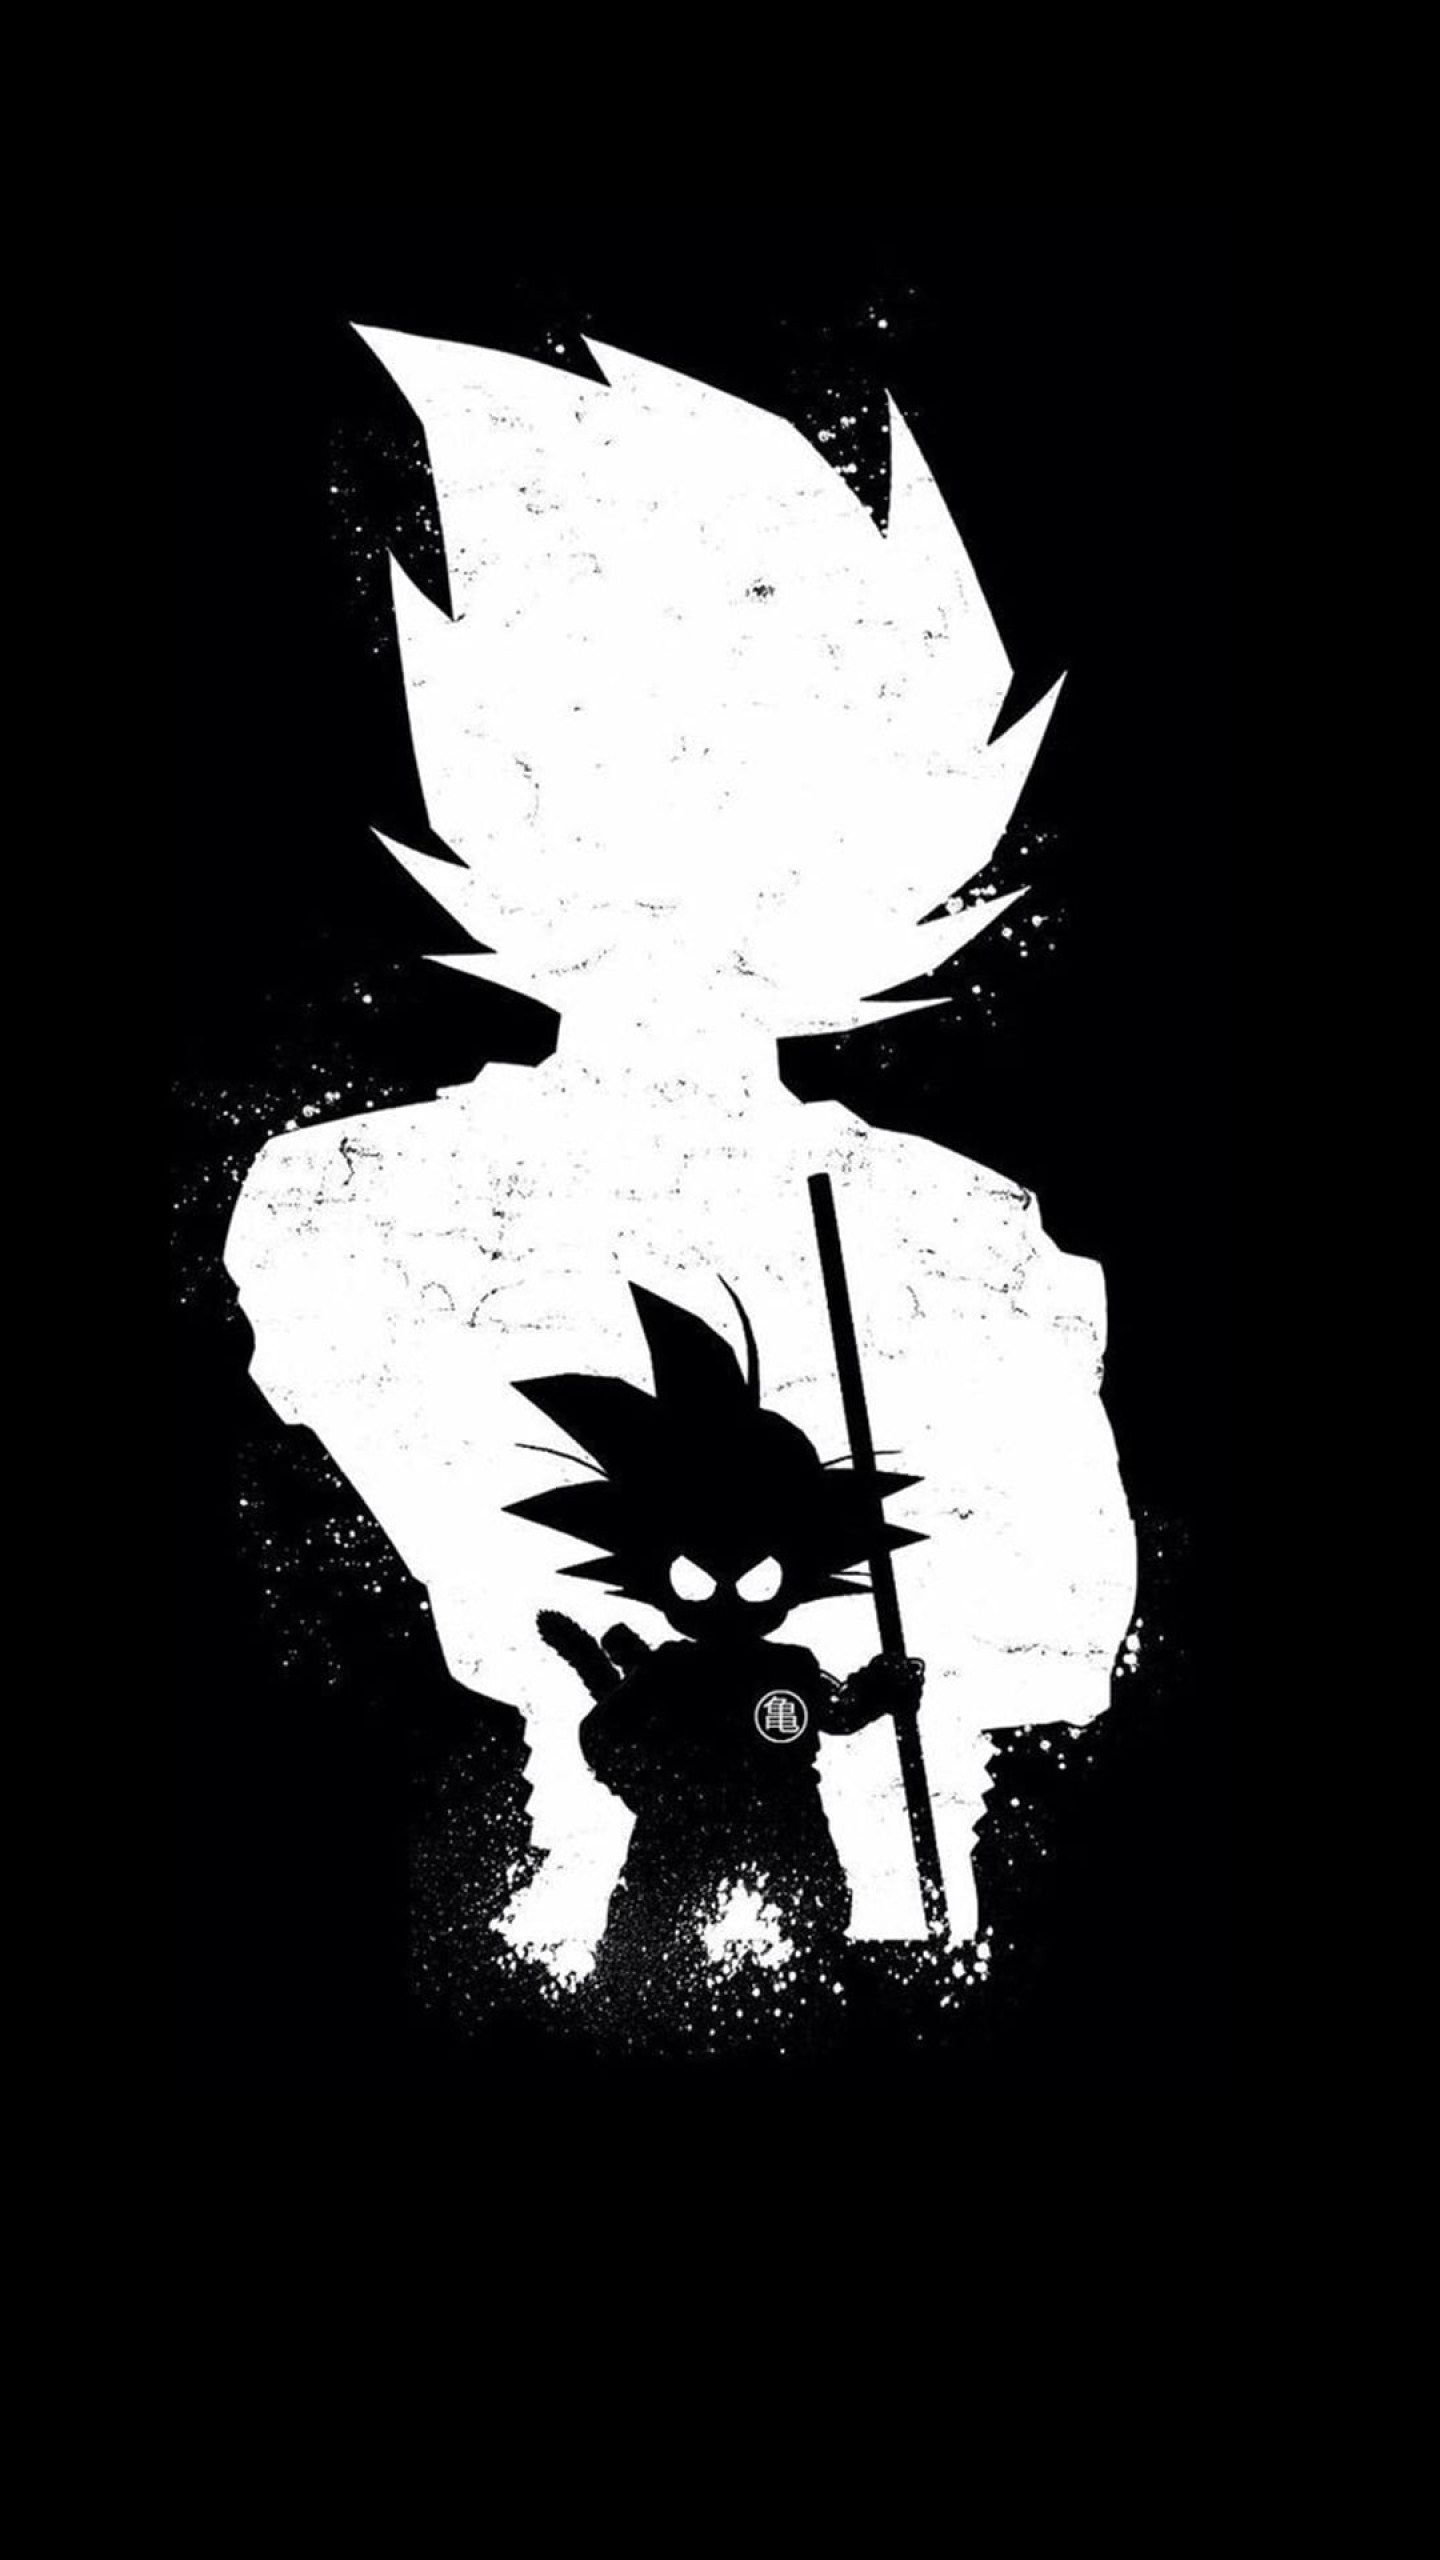 Goku Black Silhouette Wallpapers